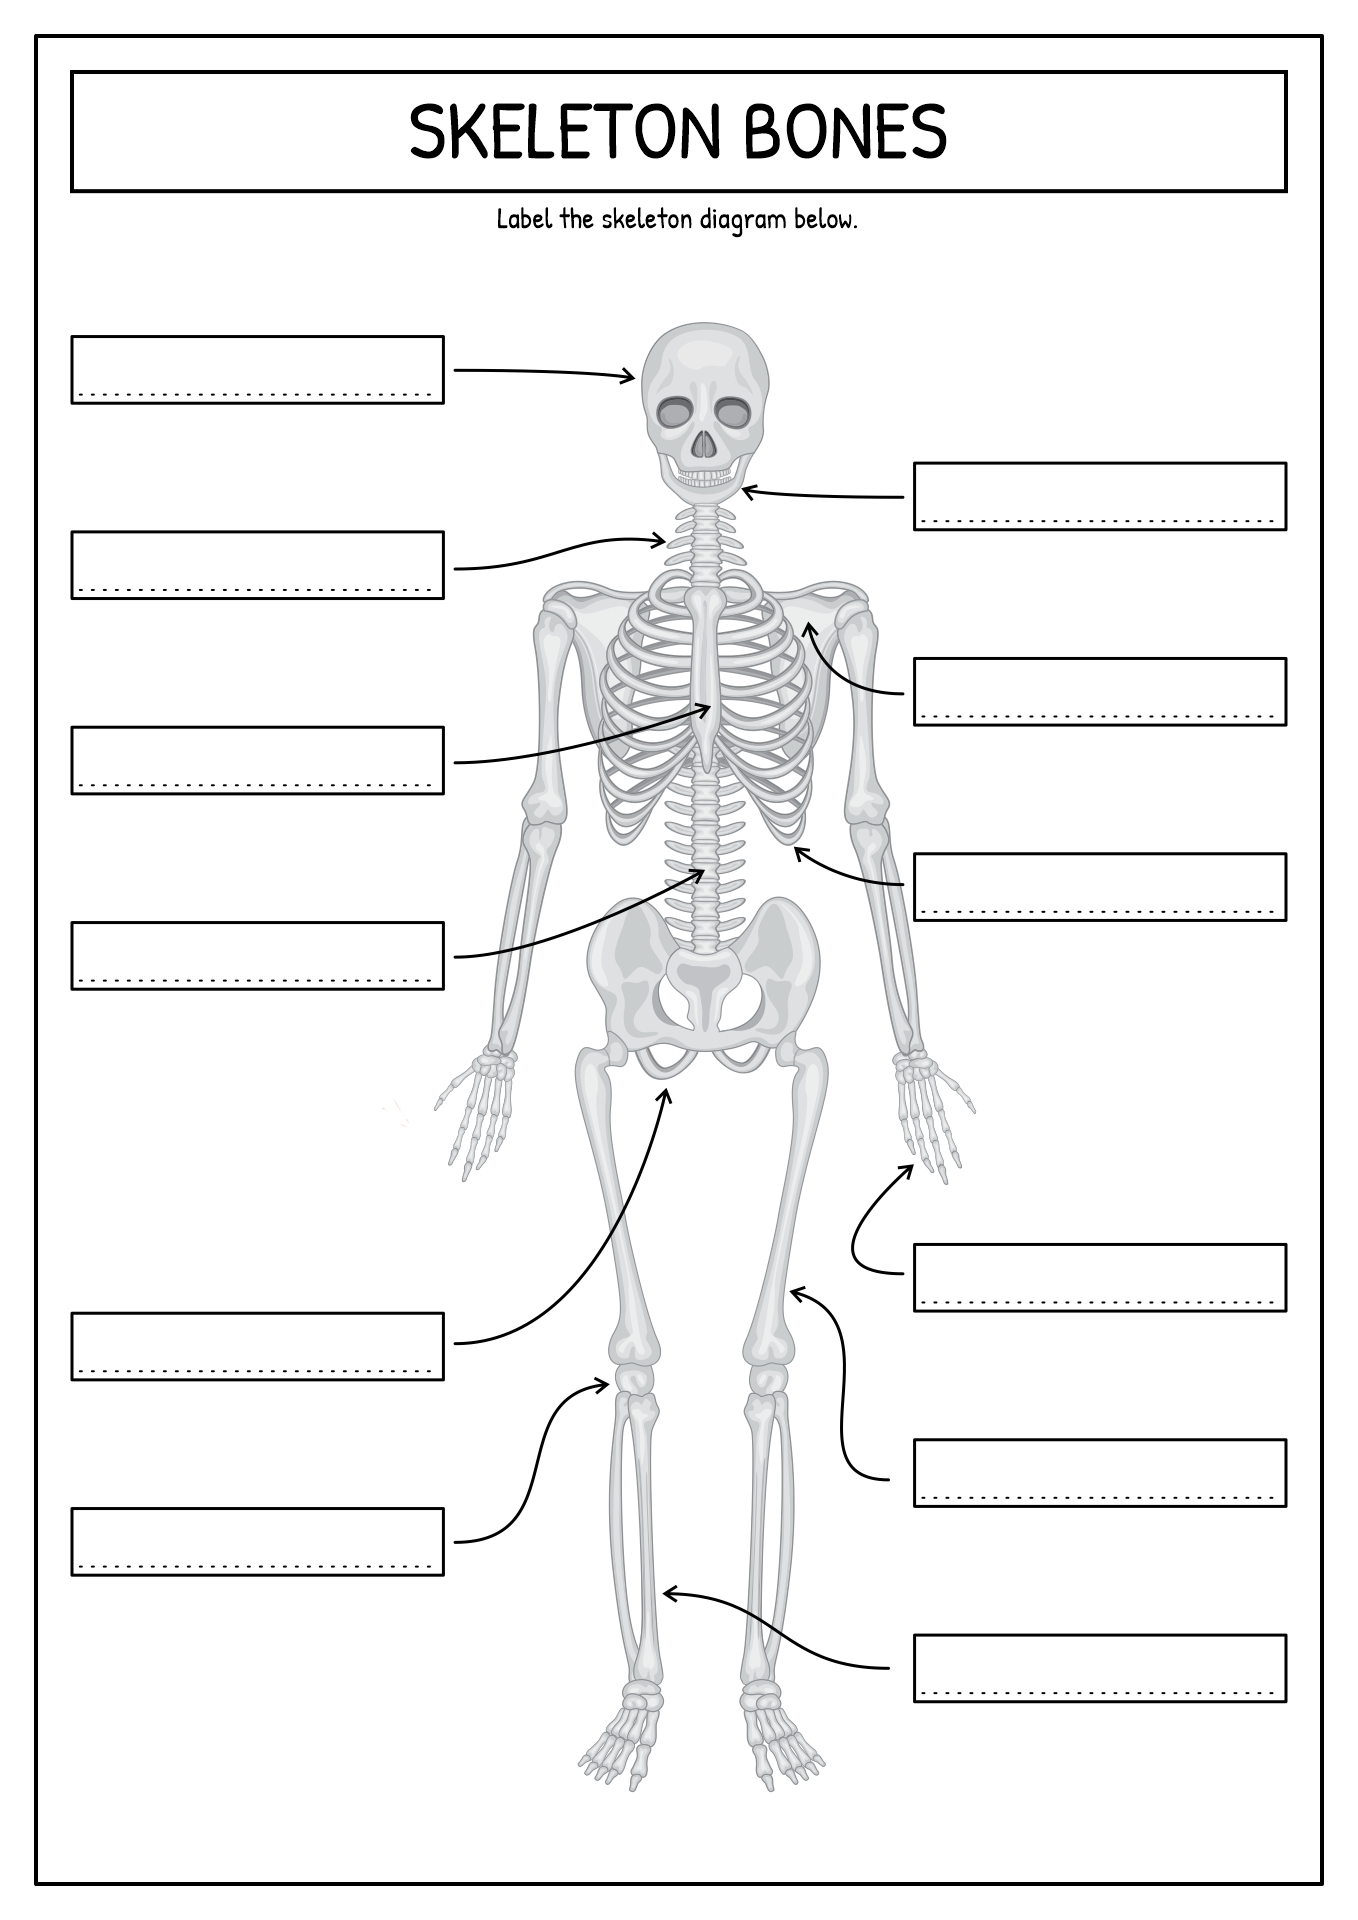 15 Best Images of Printable Bone Worksheets - Skull Bones ...